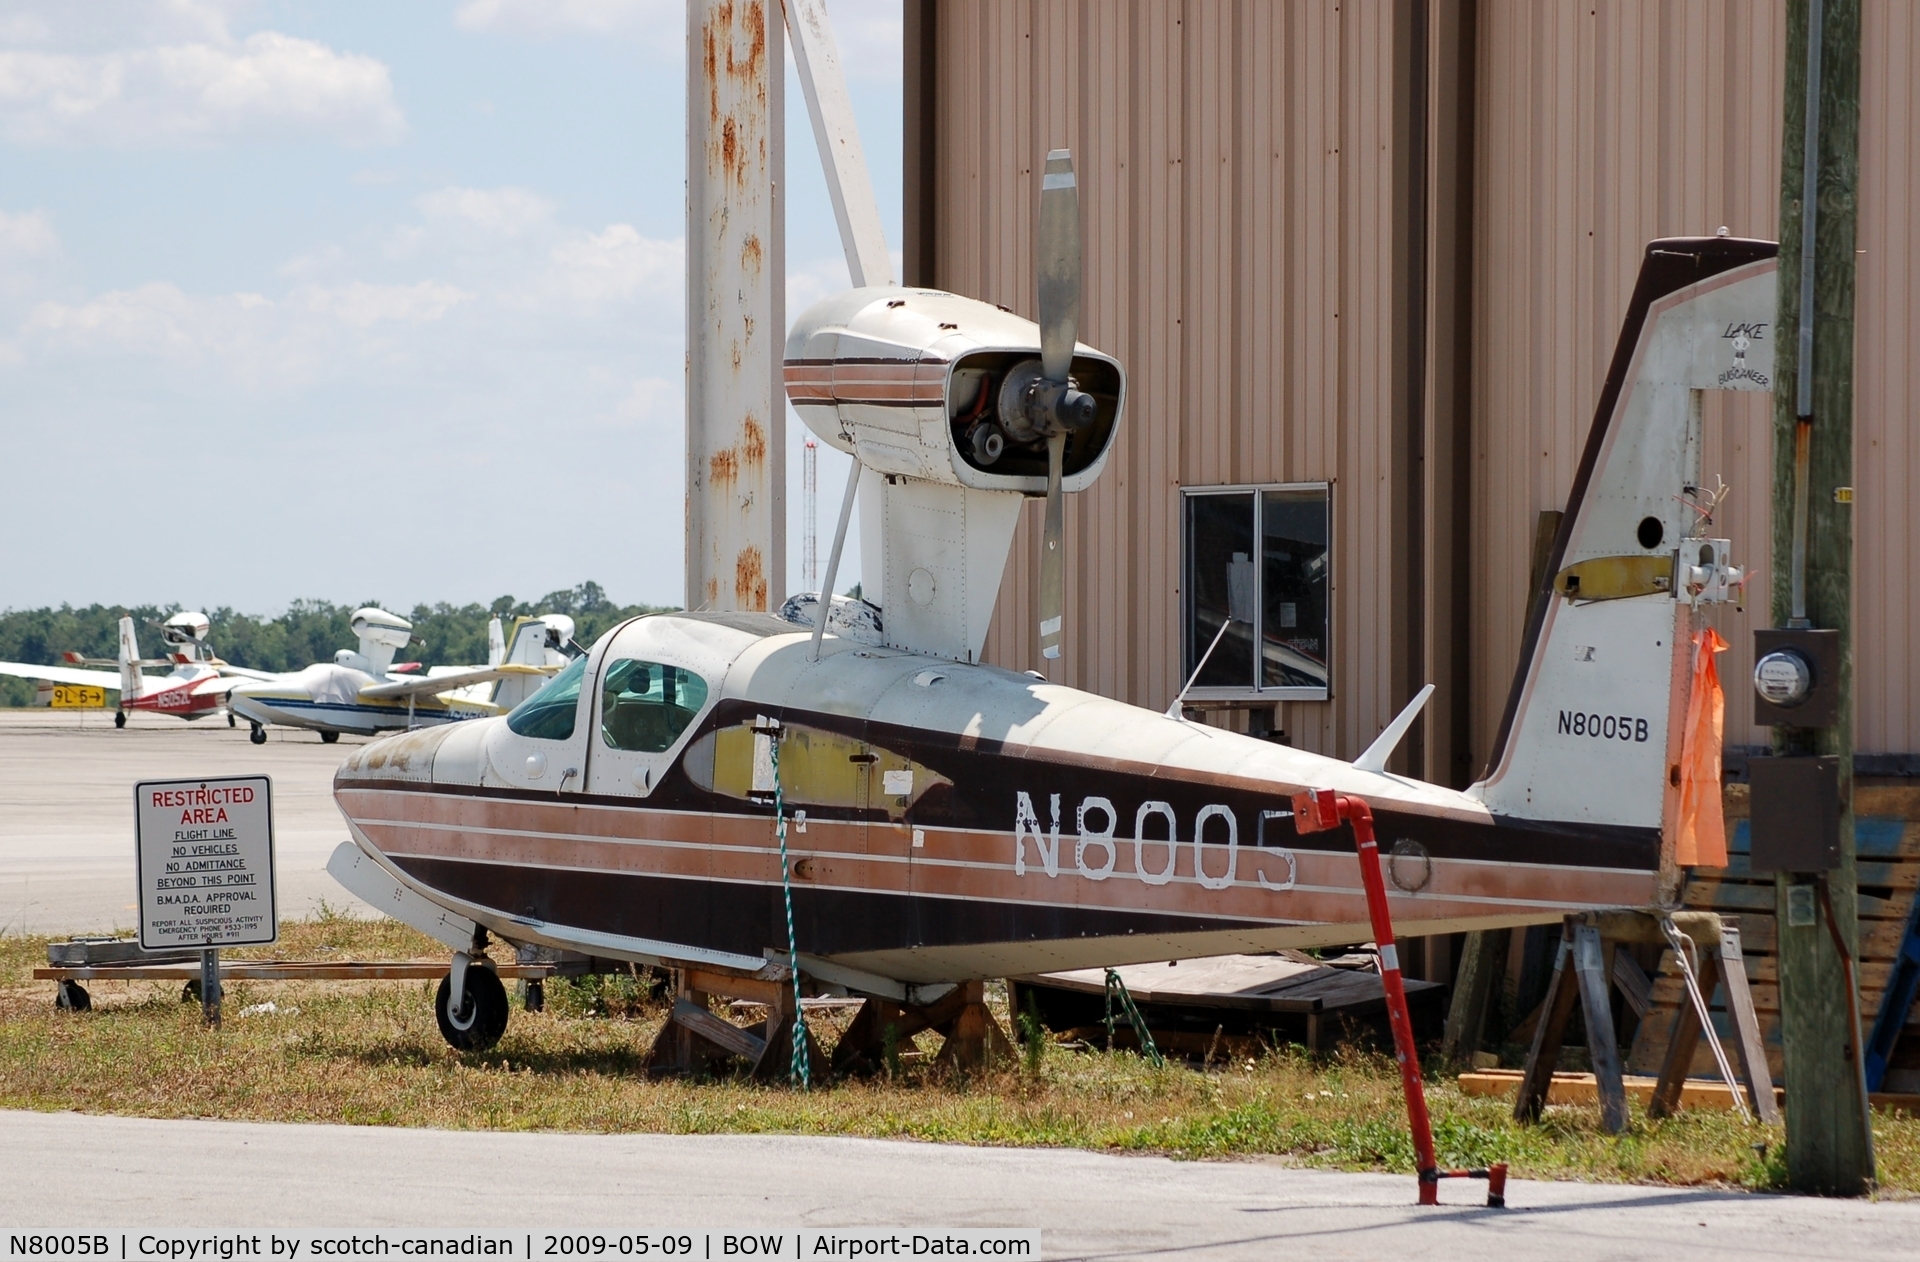 N8005B, Consolidated Aeronautics Inc. LAKE LA-4-200 C/N 1033, Consolidated Aeronautics Lake LA-4-200 N8005B at Bartow Municipal Airport, Bartow, FL